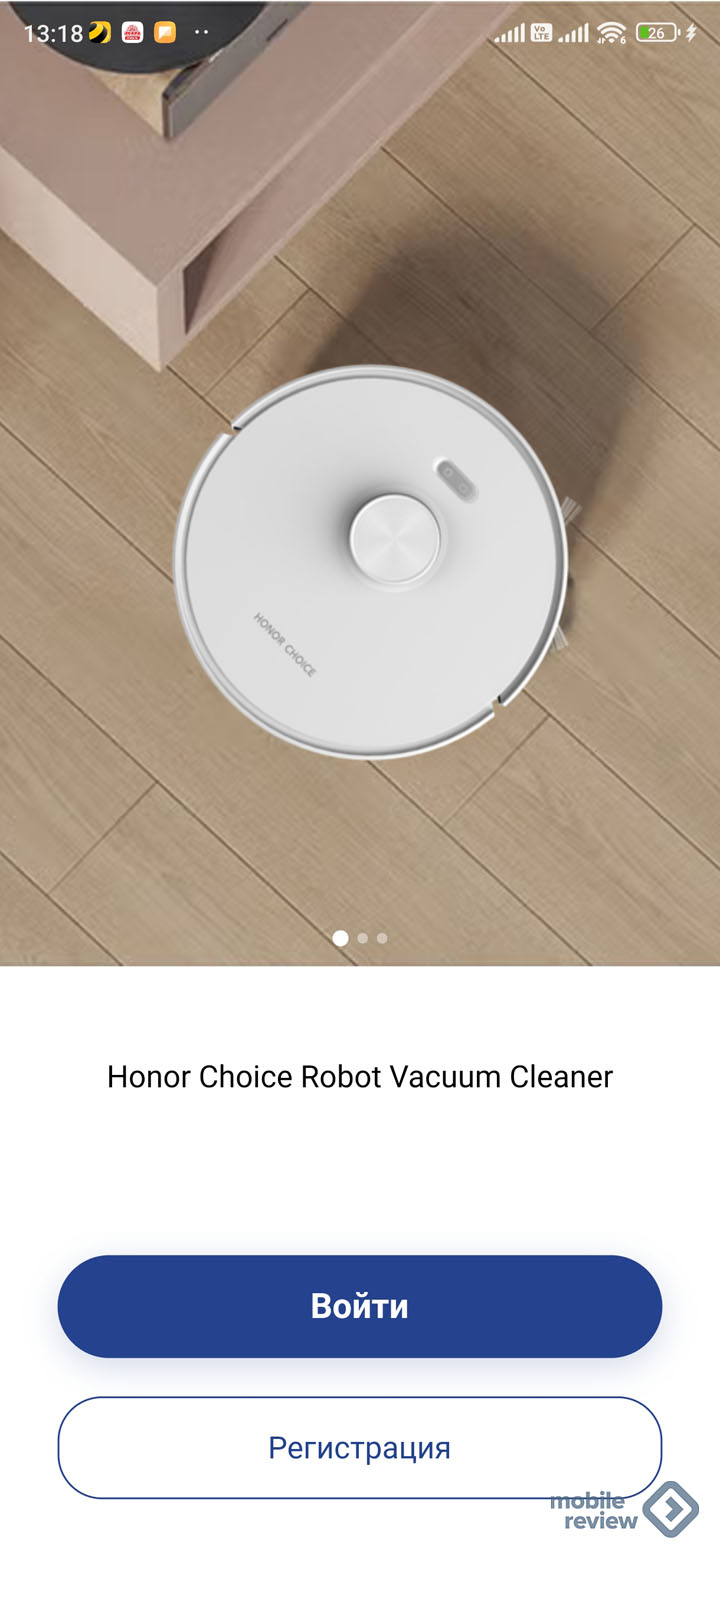 Honor choice cleaner r2 rob 00. Робот пылесос хонор. Honor choice Cleaner r2 запчасти. Зарядная станция Honor Robot Cleaner r2. Как подключить робот пылесос Honor r2.